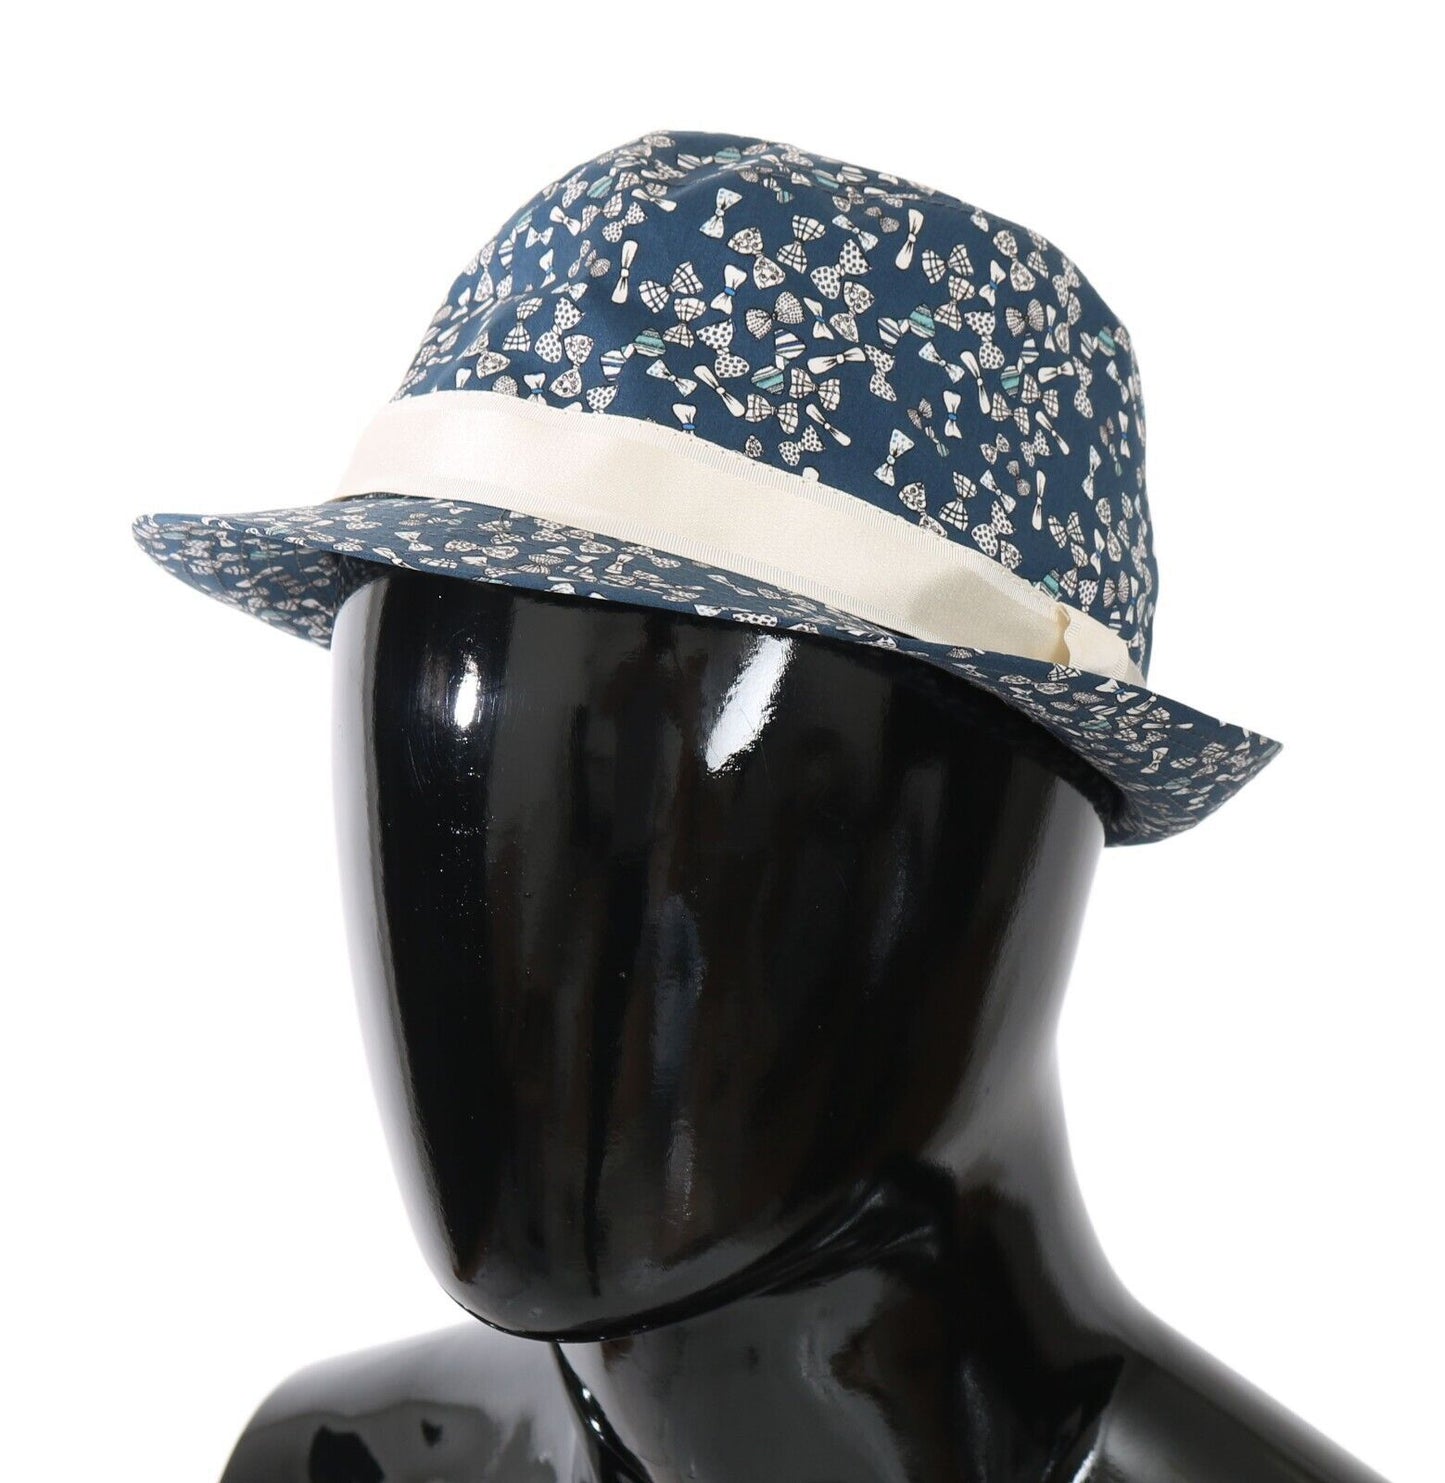 Dolce & Gabbana Elegant Bow Print Fedora Hat in Blue & White